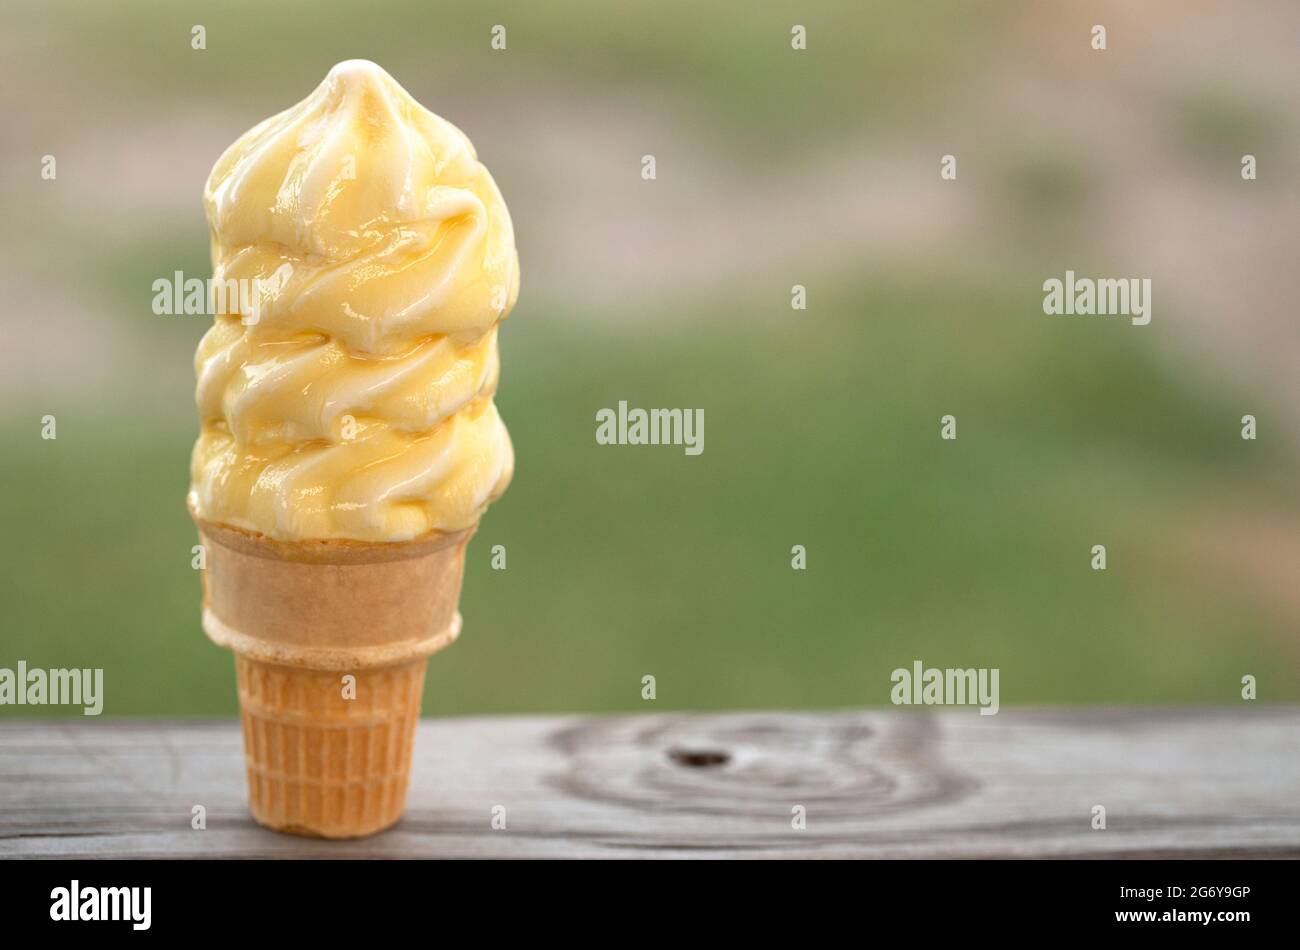 Vanilla Soft Serve Ice Cream Cone Melting in the Summer Heat Stock Photo